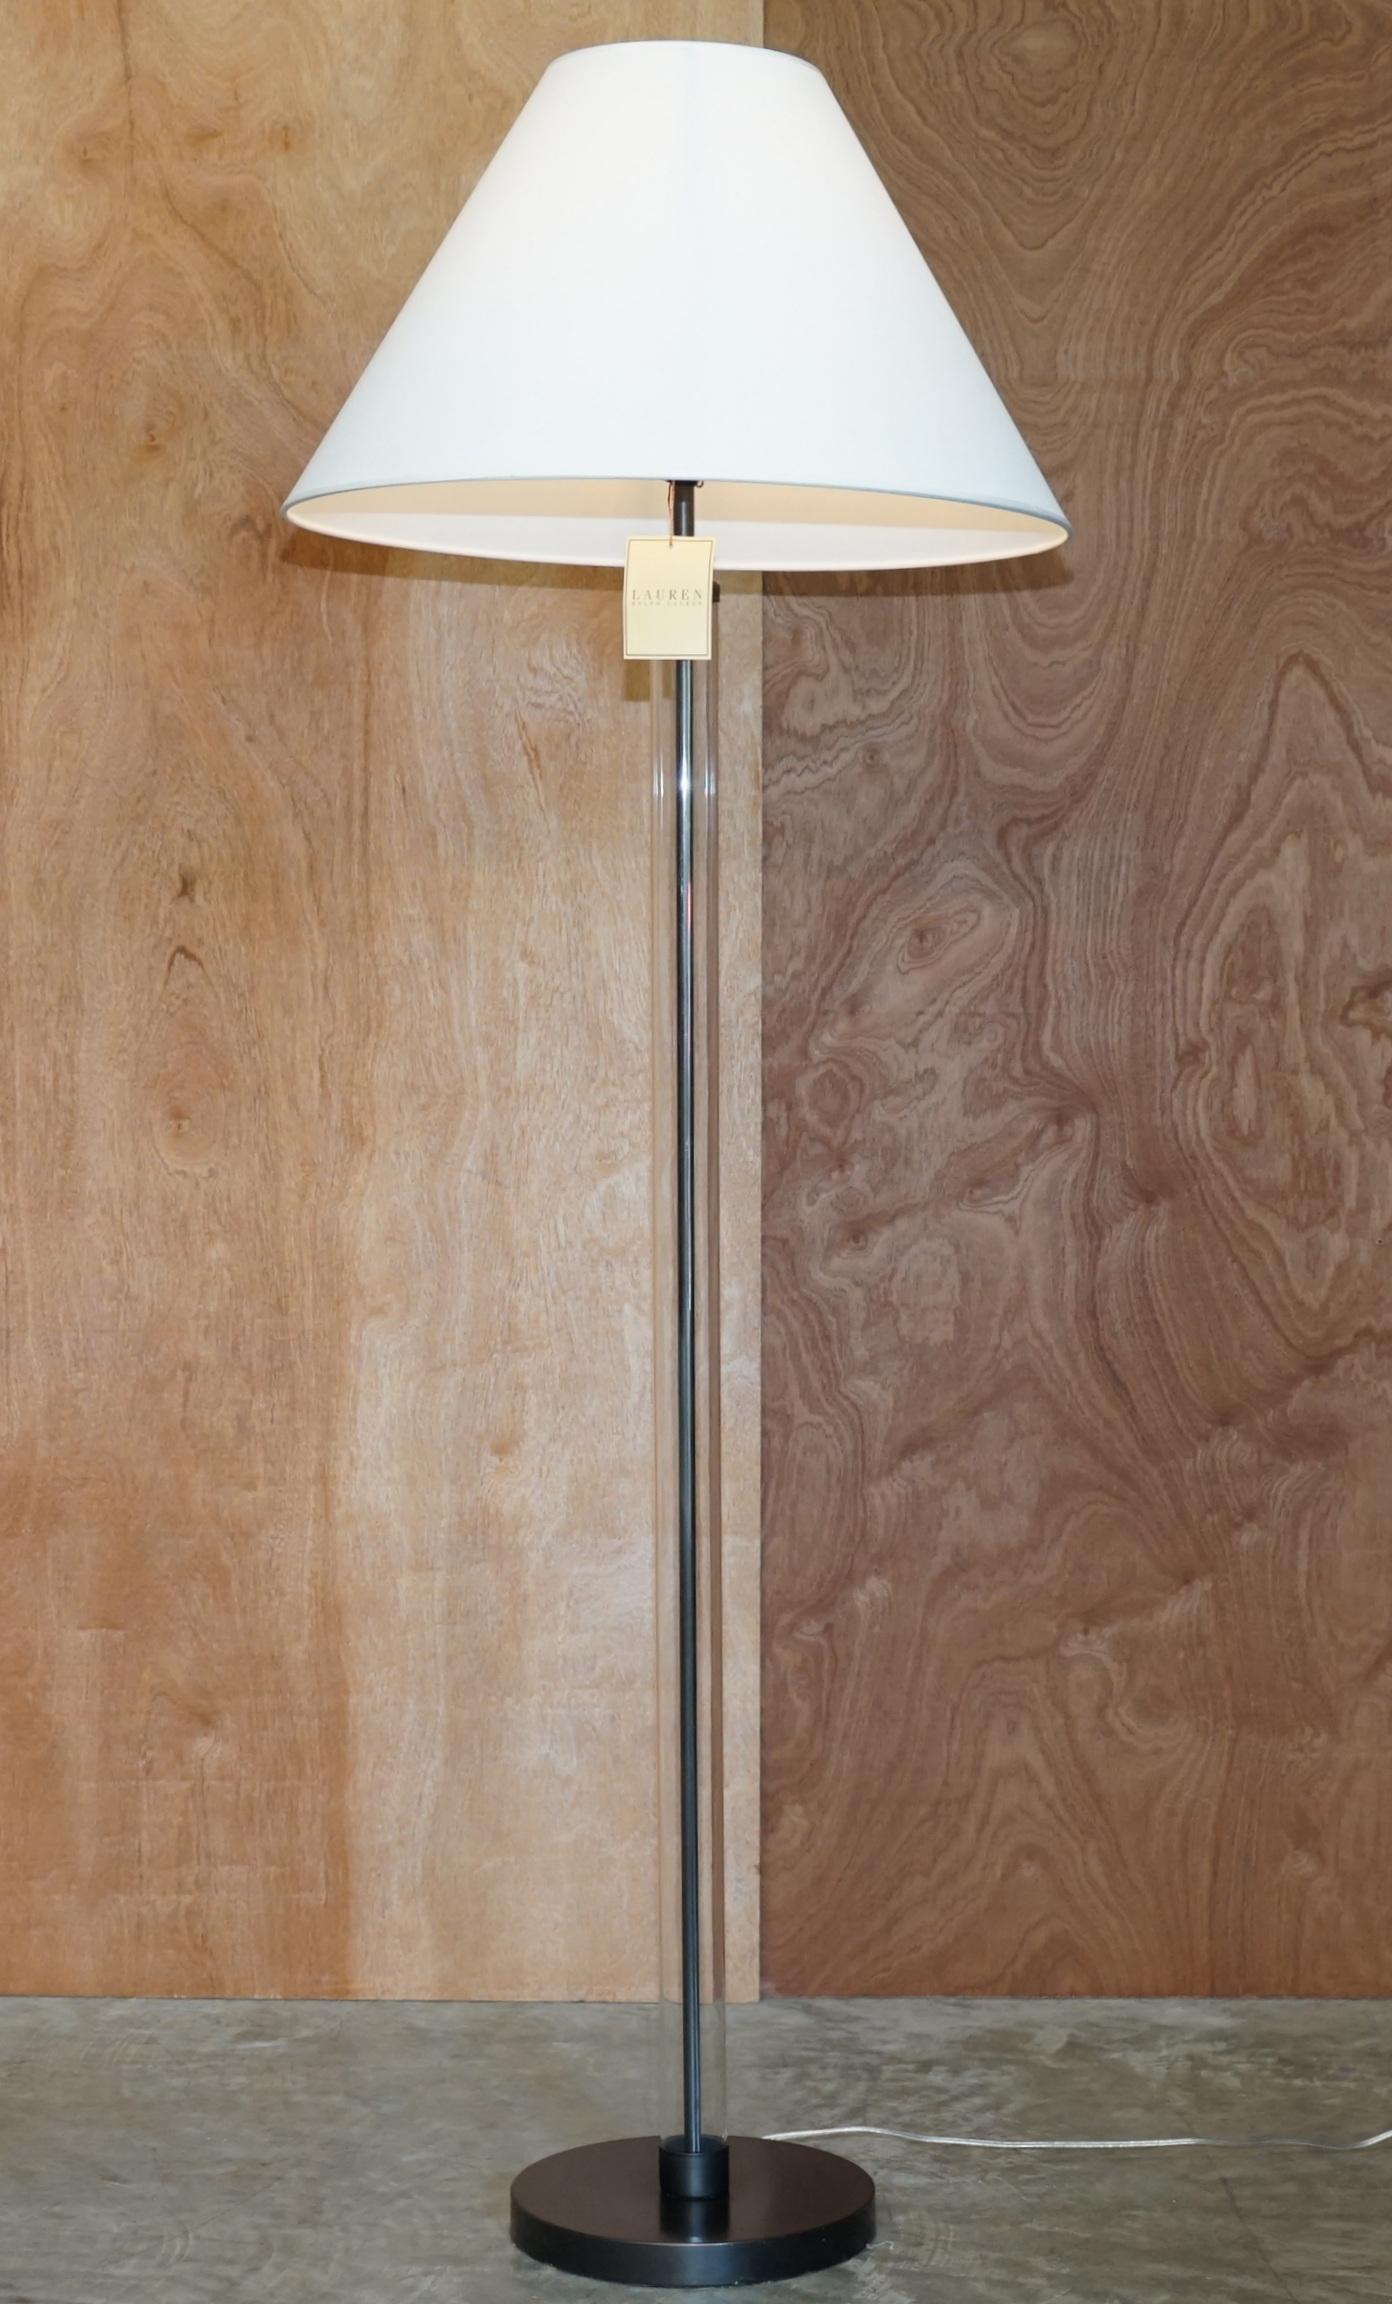 Antique Art Nouveau Floor Standing Lamp Height Adjustable Brass Sculptured Frame For Sale 5